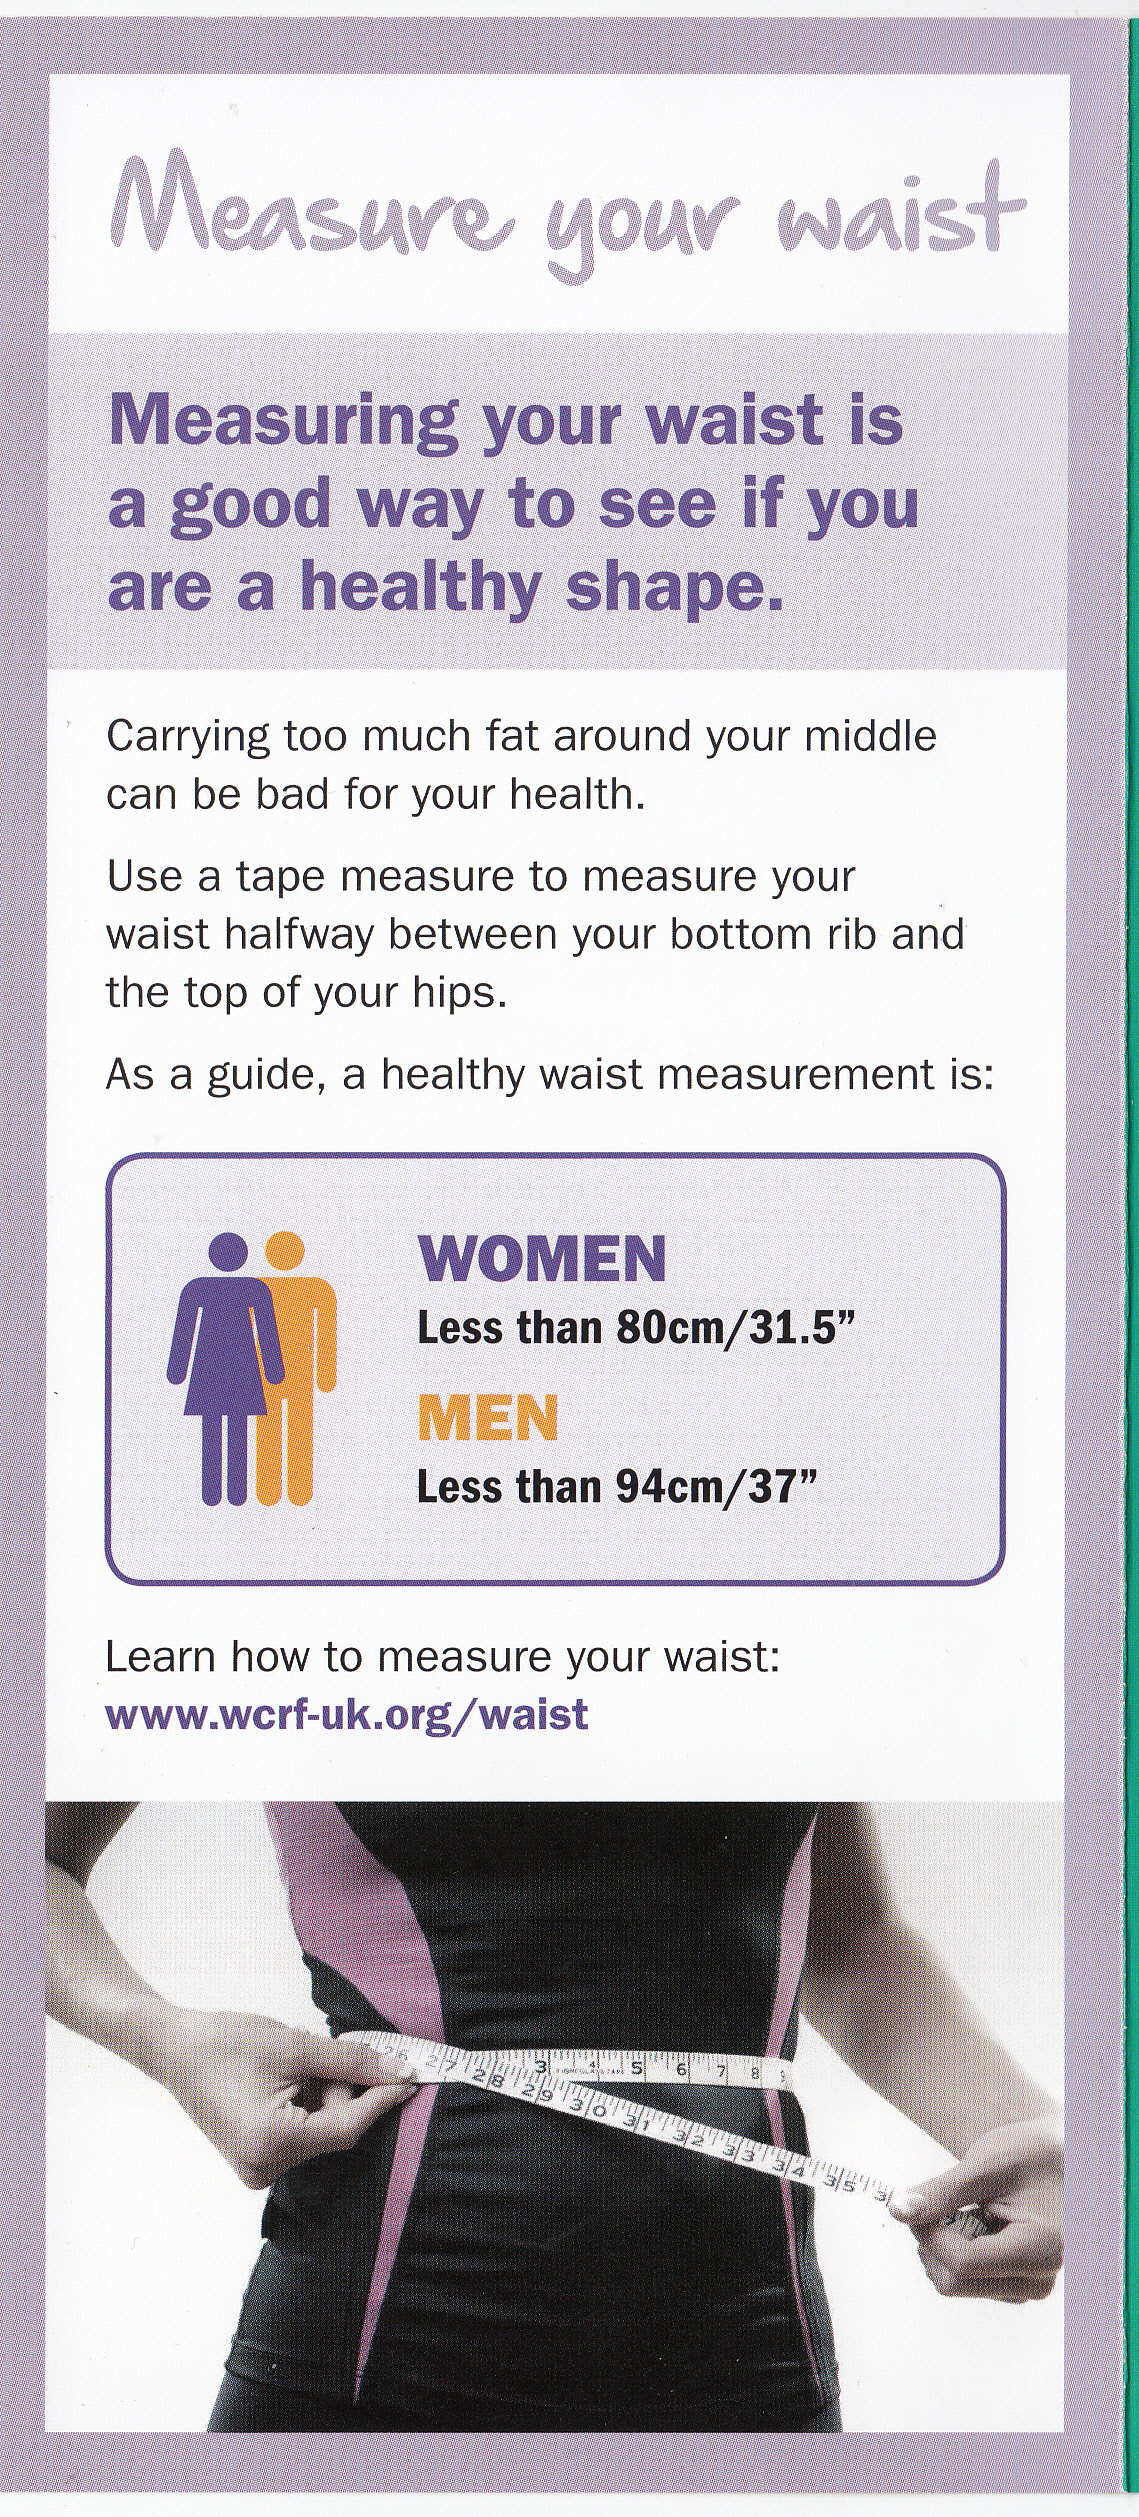 Measure your waist